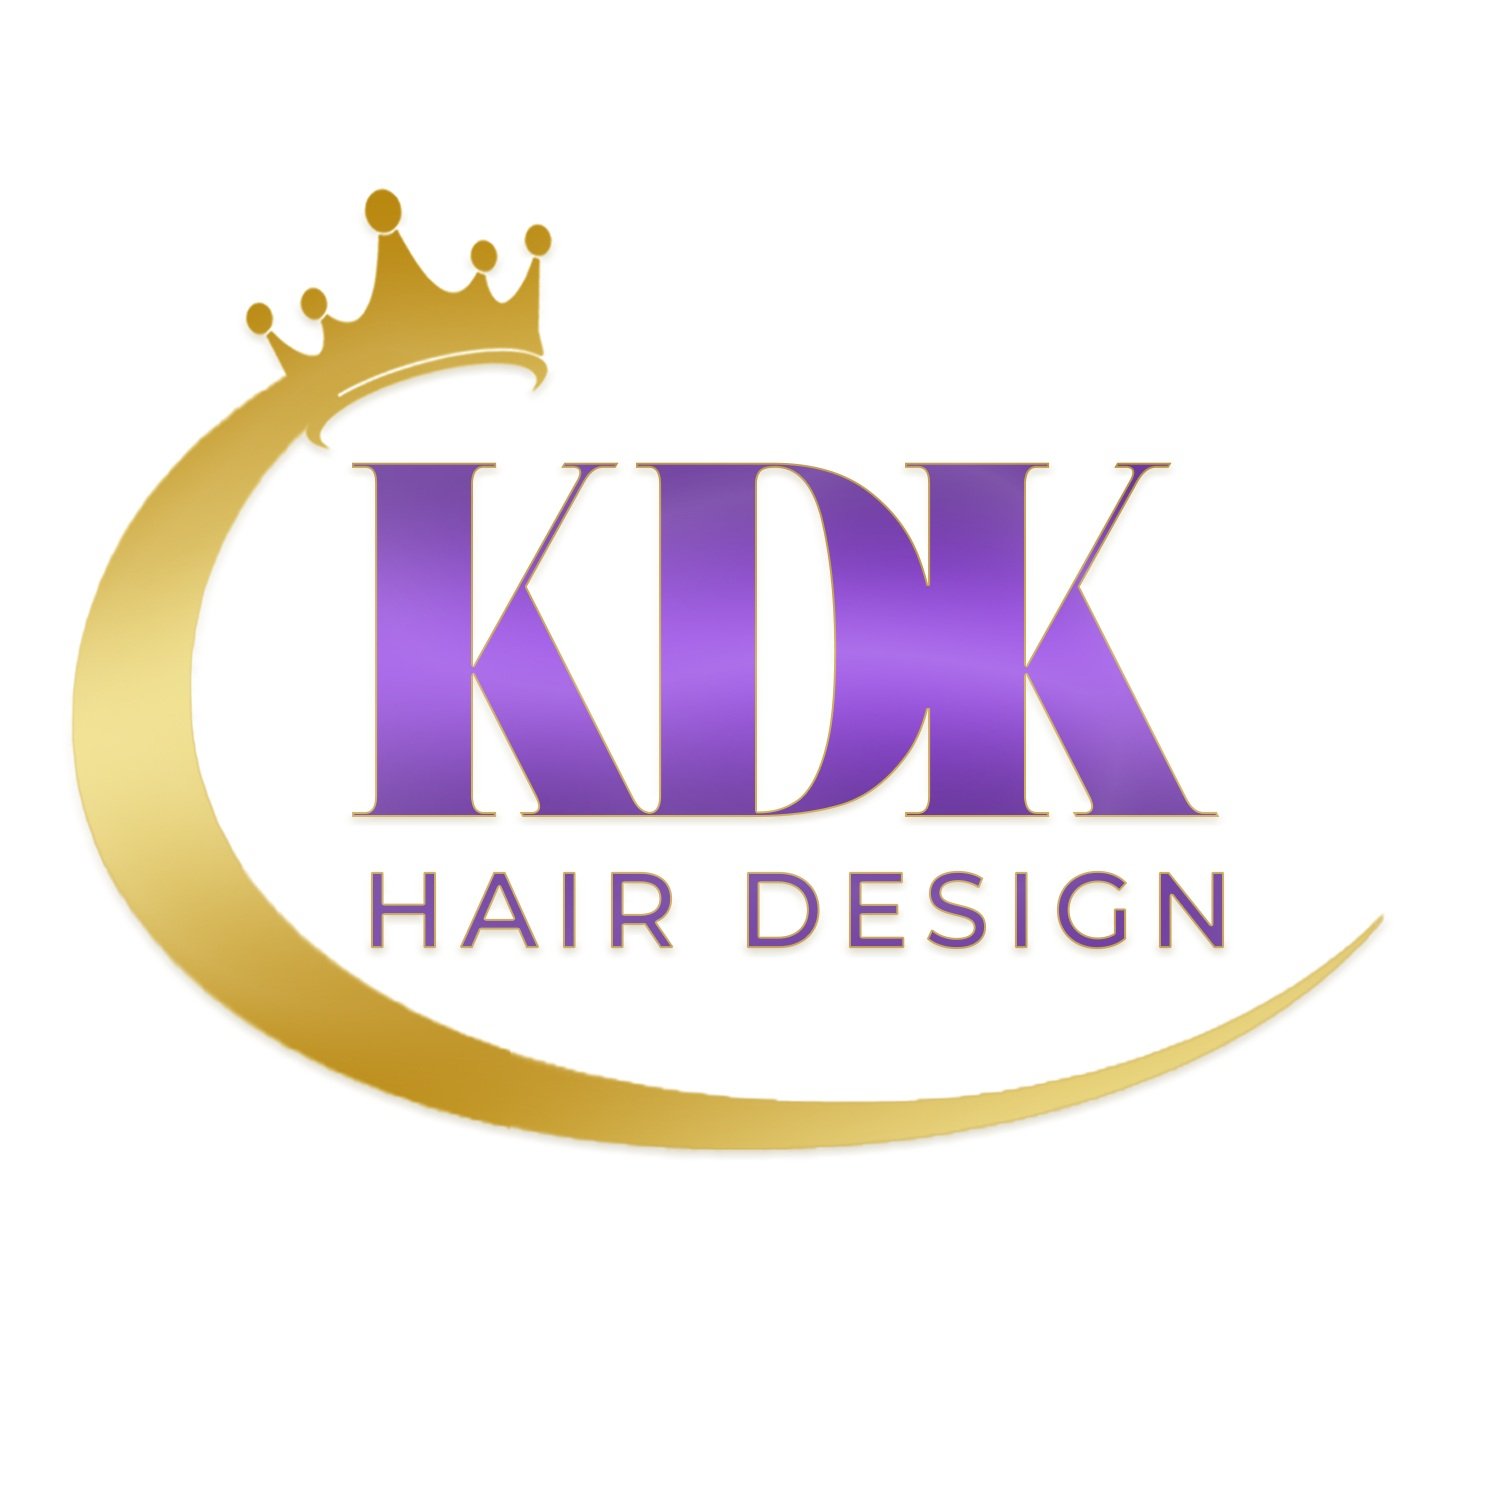 KDK Hair Design